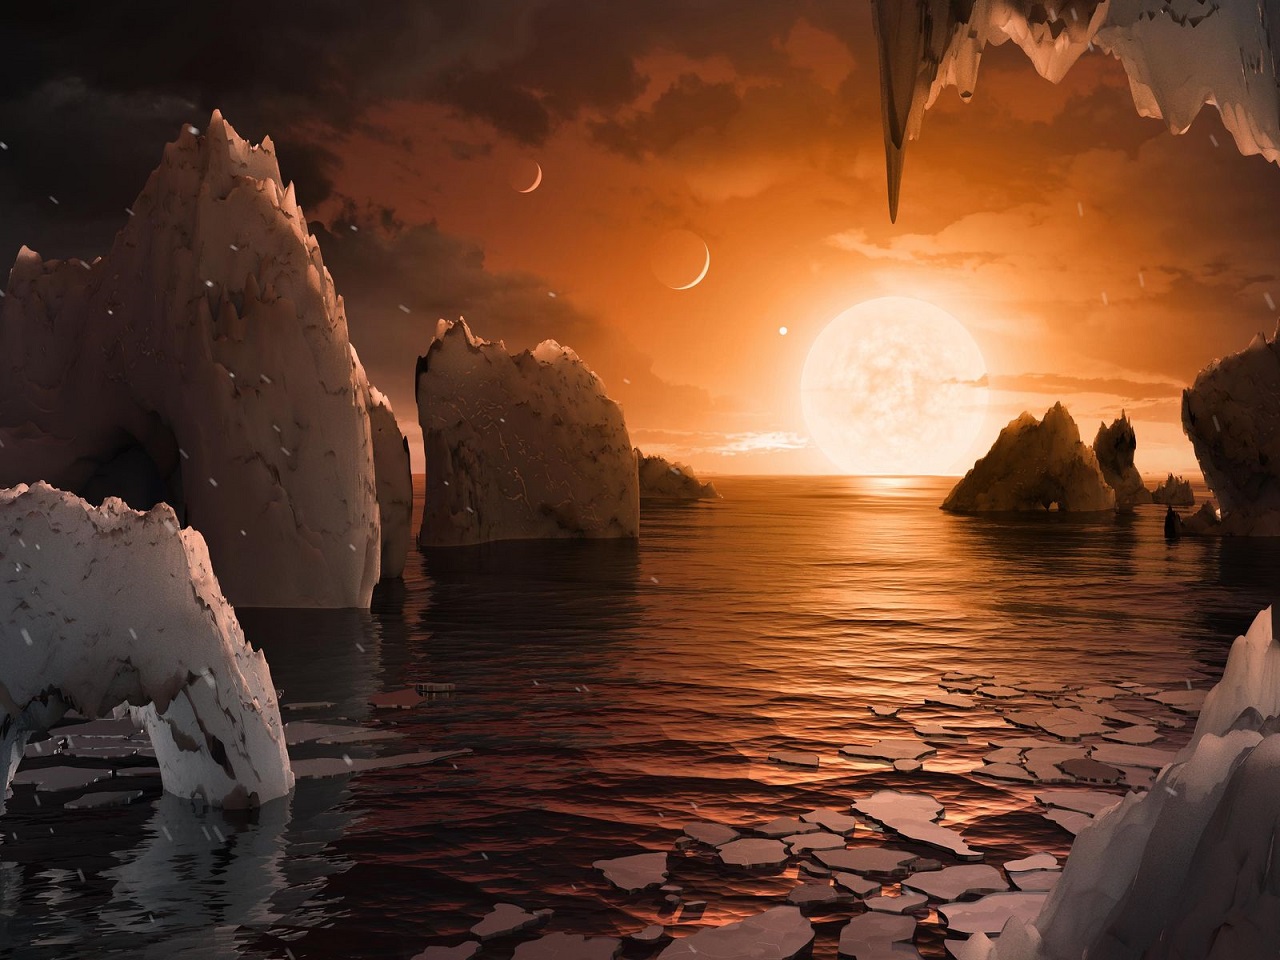 TRAPPIST-1-ის პლანეტებზე ზედმეტად ბევრი წყალია იმისათვის, რათა სიცოცხლე არსებობდეს